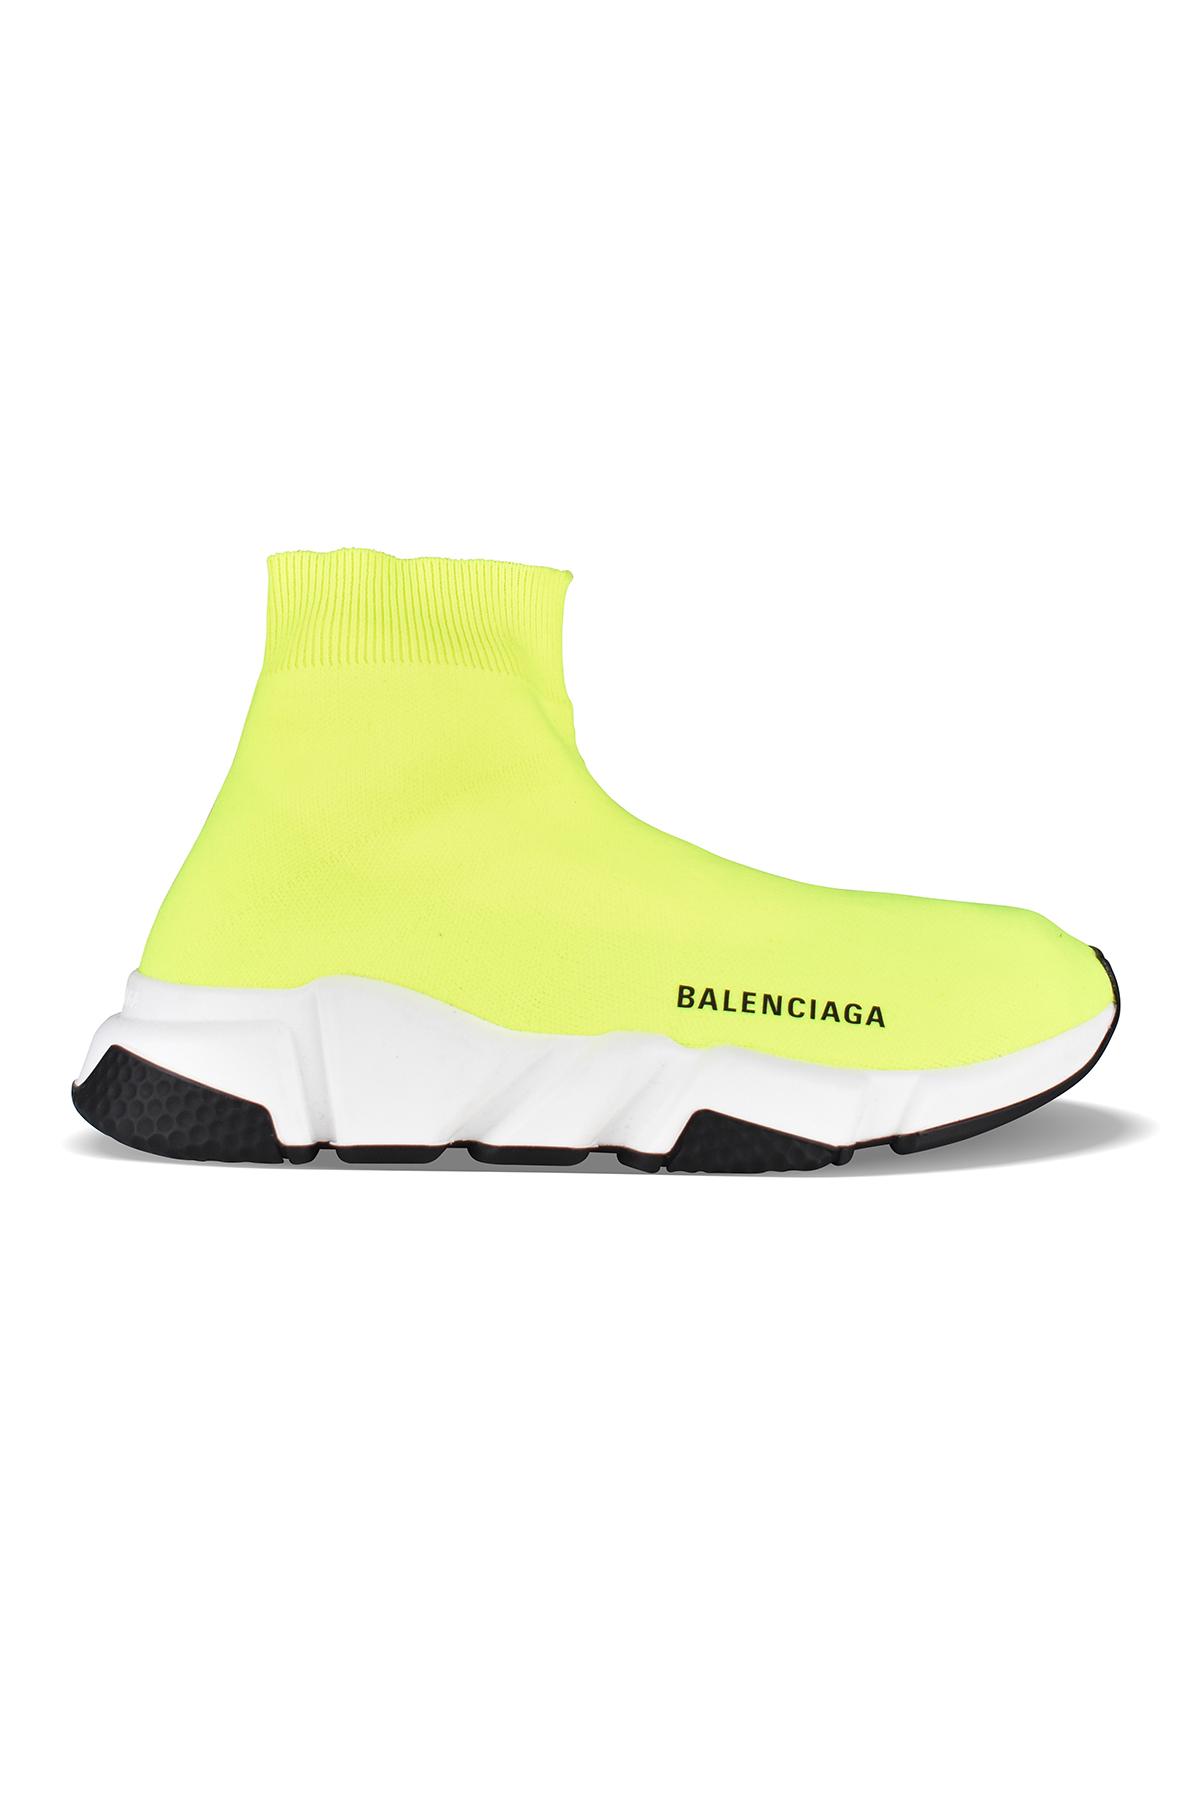 Balenciaga Speed Sneakers in Yellow | Lyst